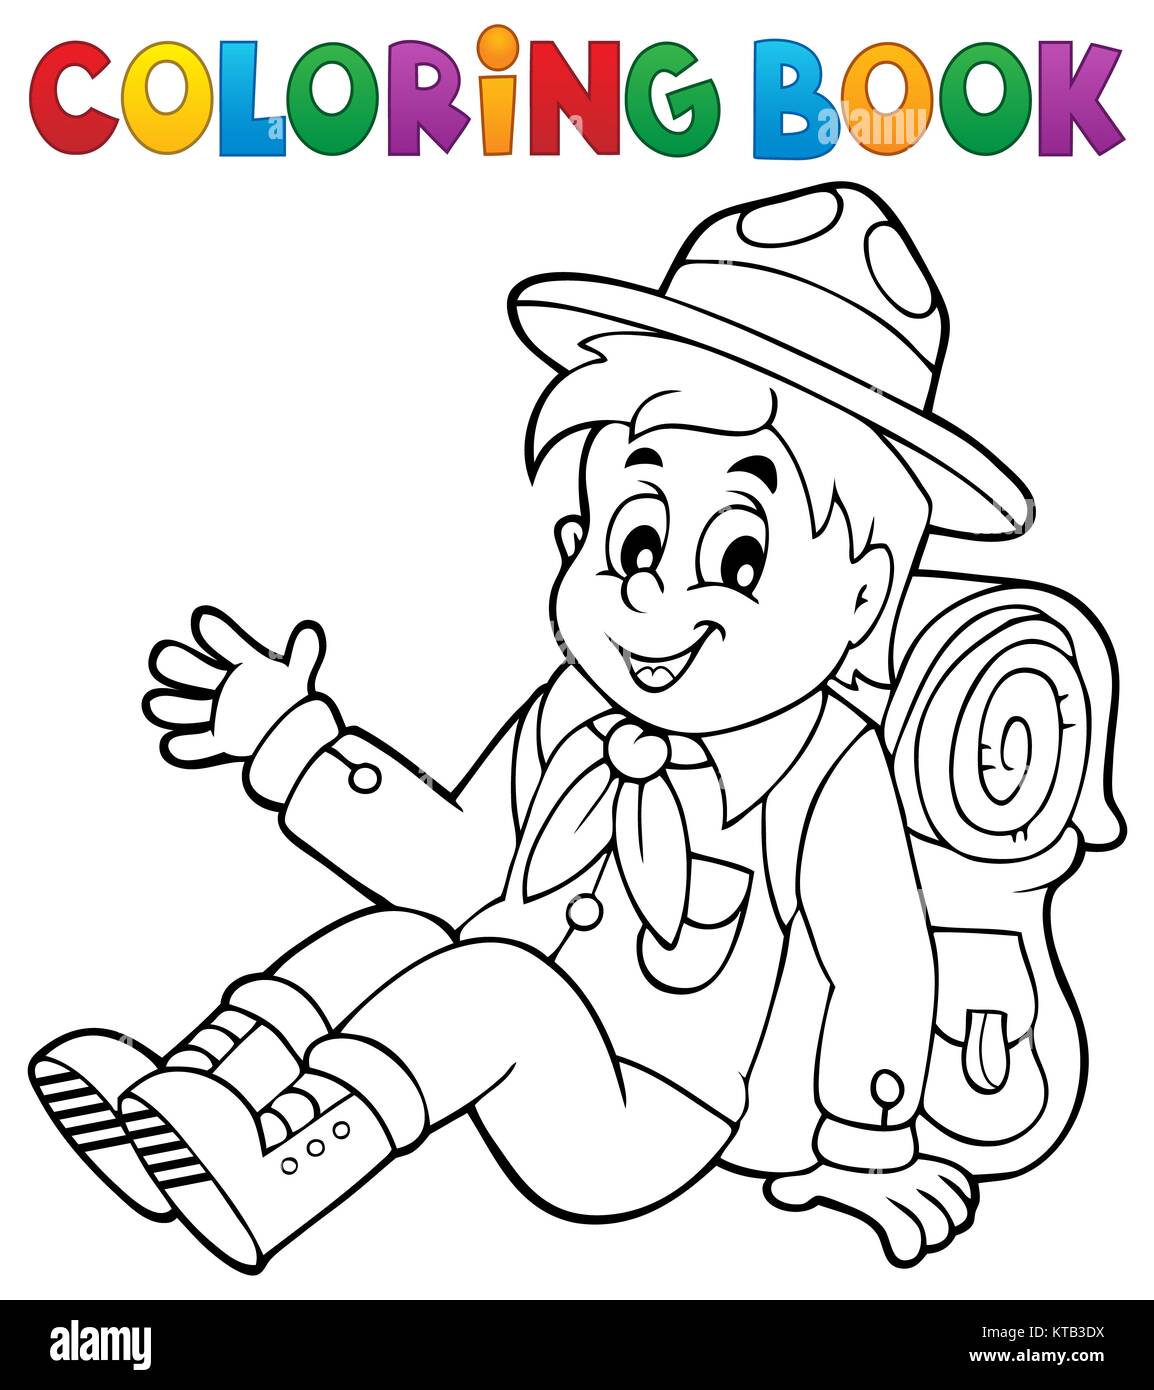 Coloring book scout boy theme 2 Stock Photo - Alamy